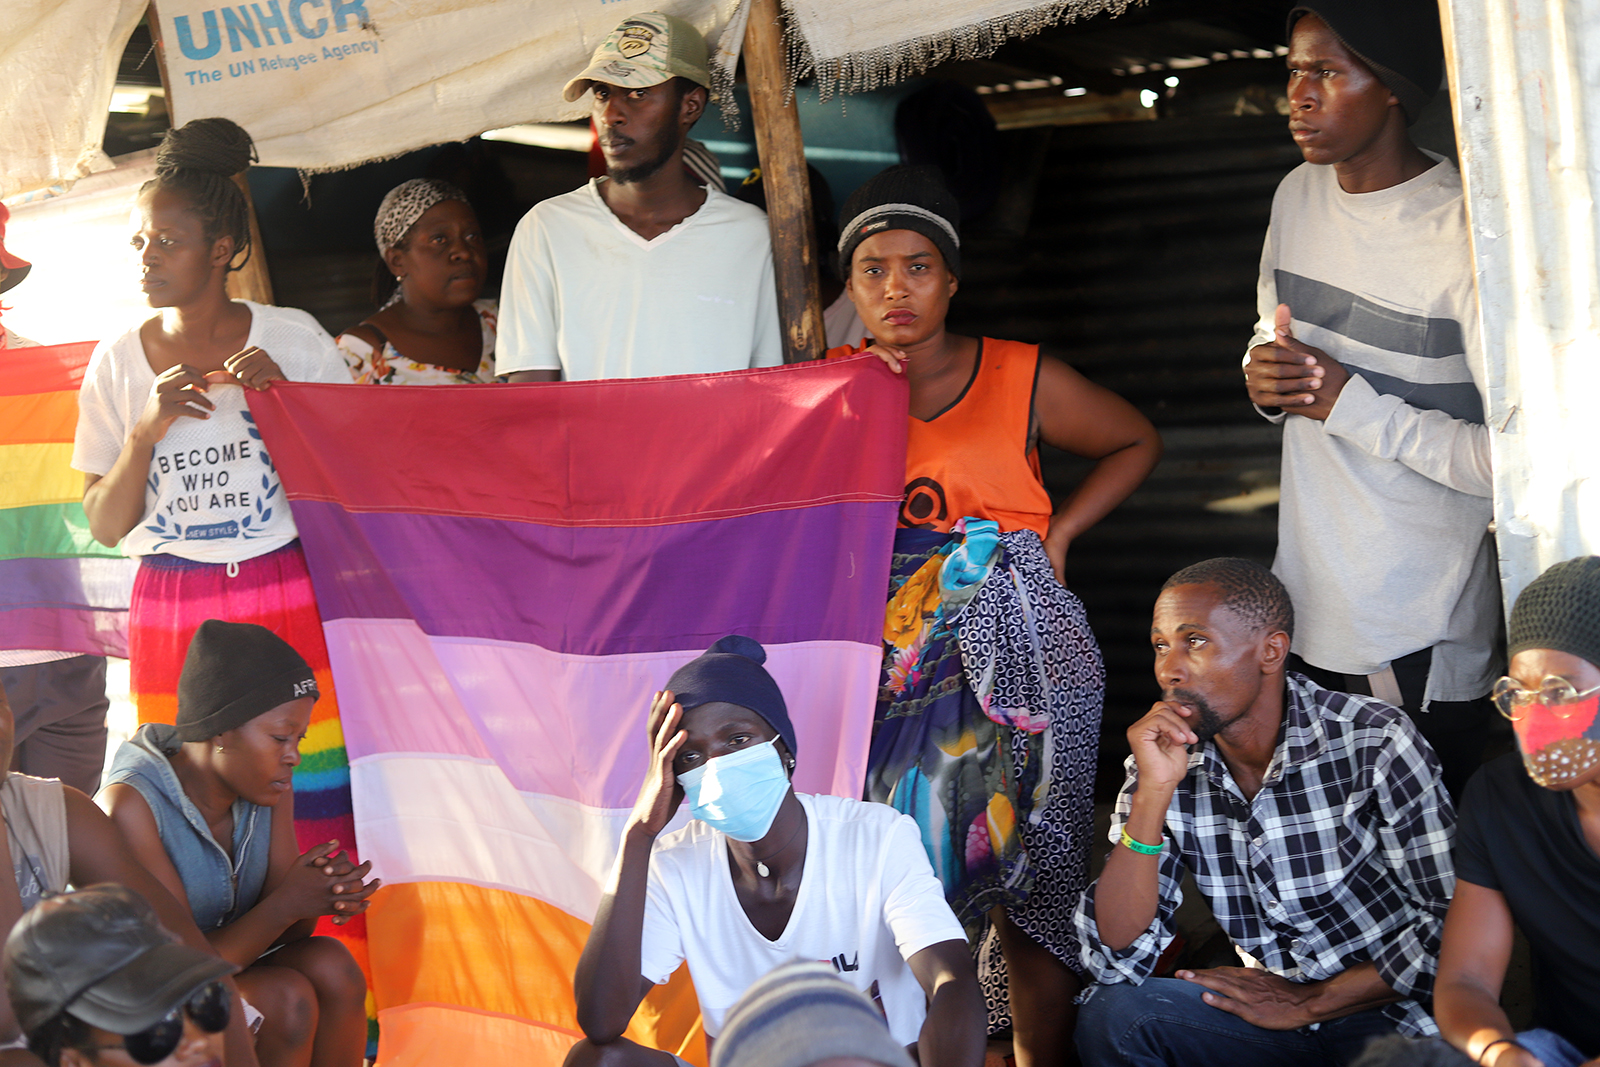 Many Ugandan LGBTQ refugees at Kakuma Refugee Camp in Kenya are seeking safety after escaping homophobic attacks in Uganda. Refugees demonstrate at the UNHCR refugee camp in northwest Kenya on Nov. 23, 2022. (RNS photo/Tonny Onyulo)